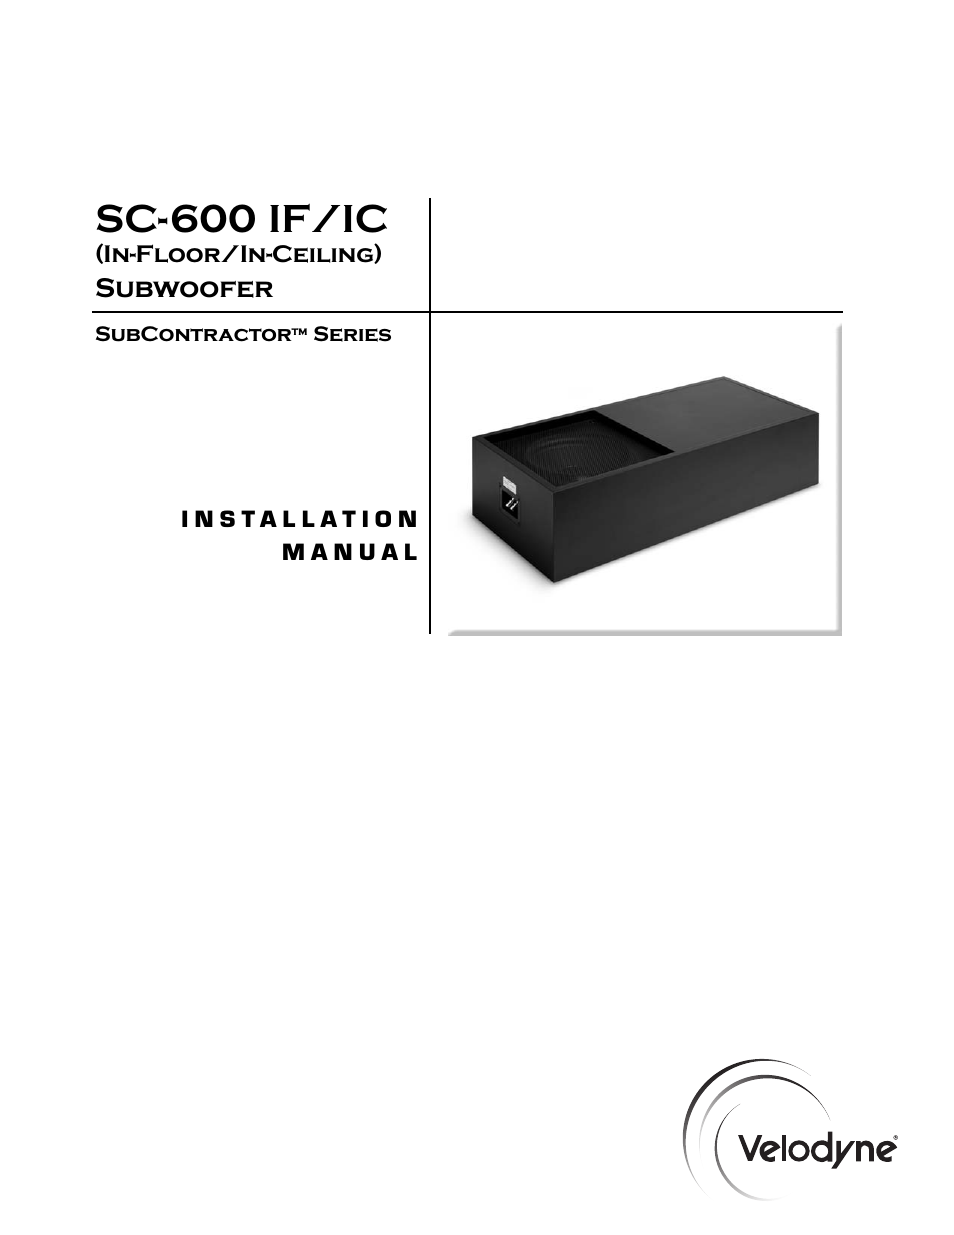 SUBCONTRACTOR SC-600 IF/IC